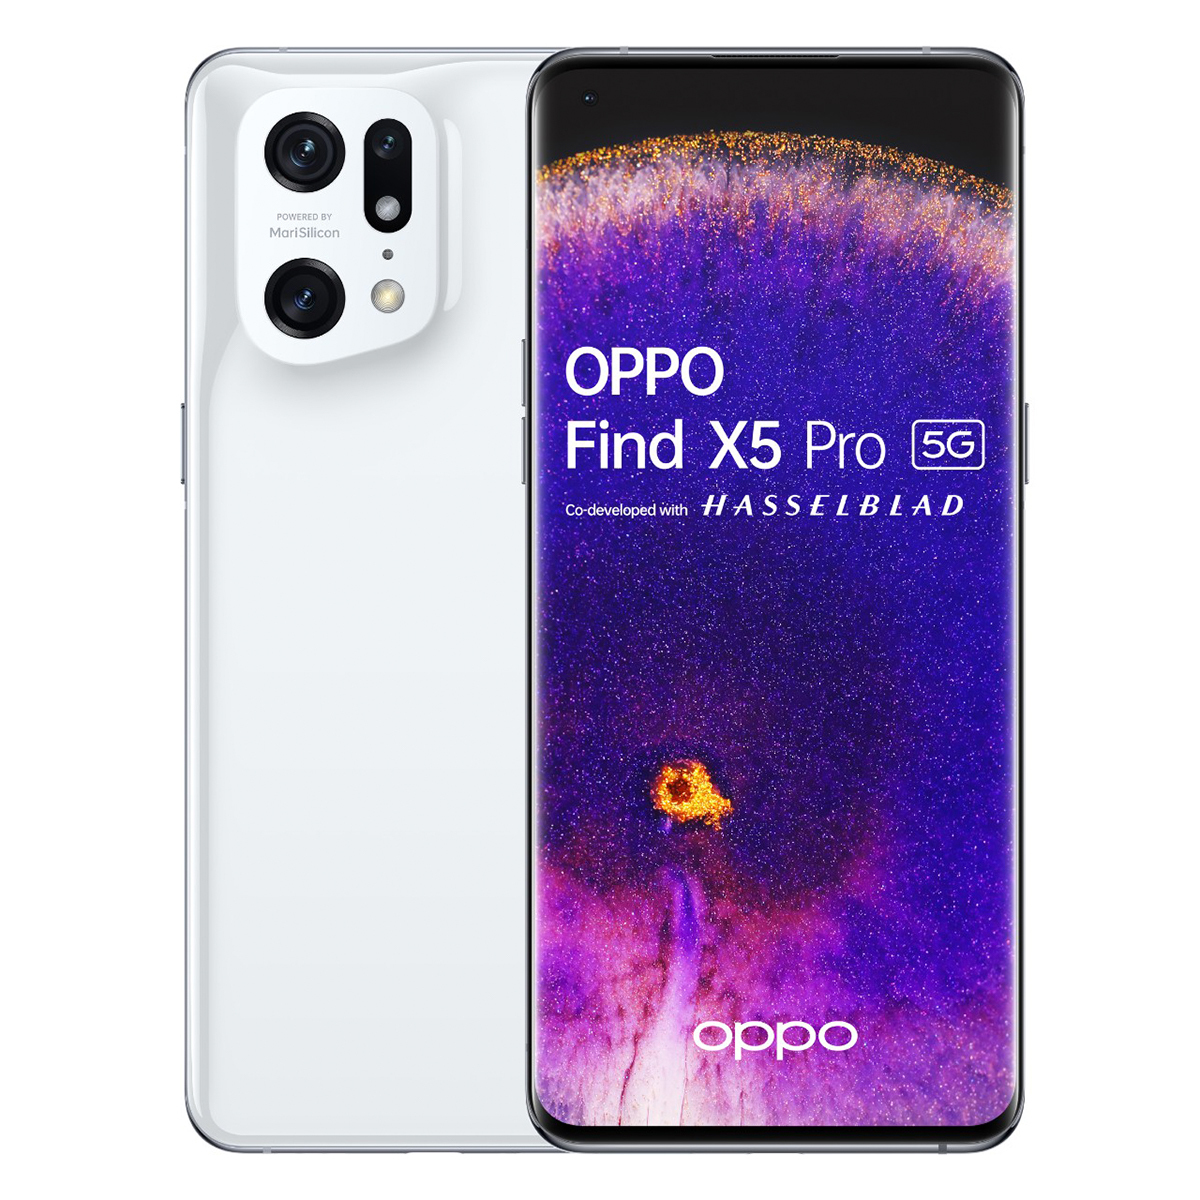 OPPO Find X5 Pro 256 GB / ceramic white / (dualsim) / 5G